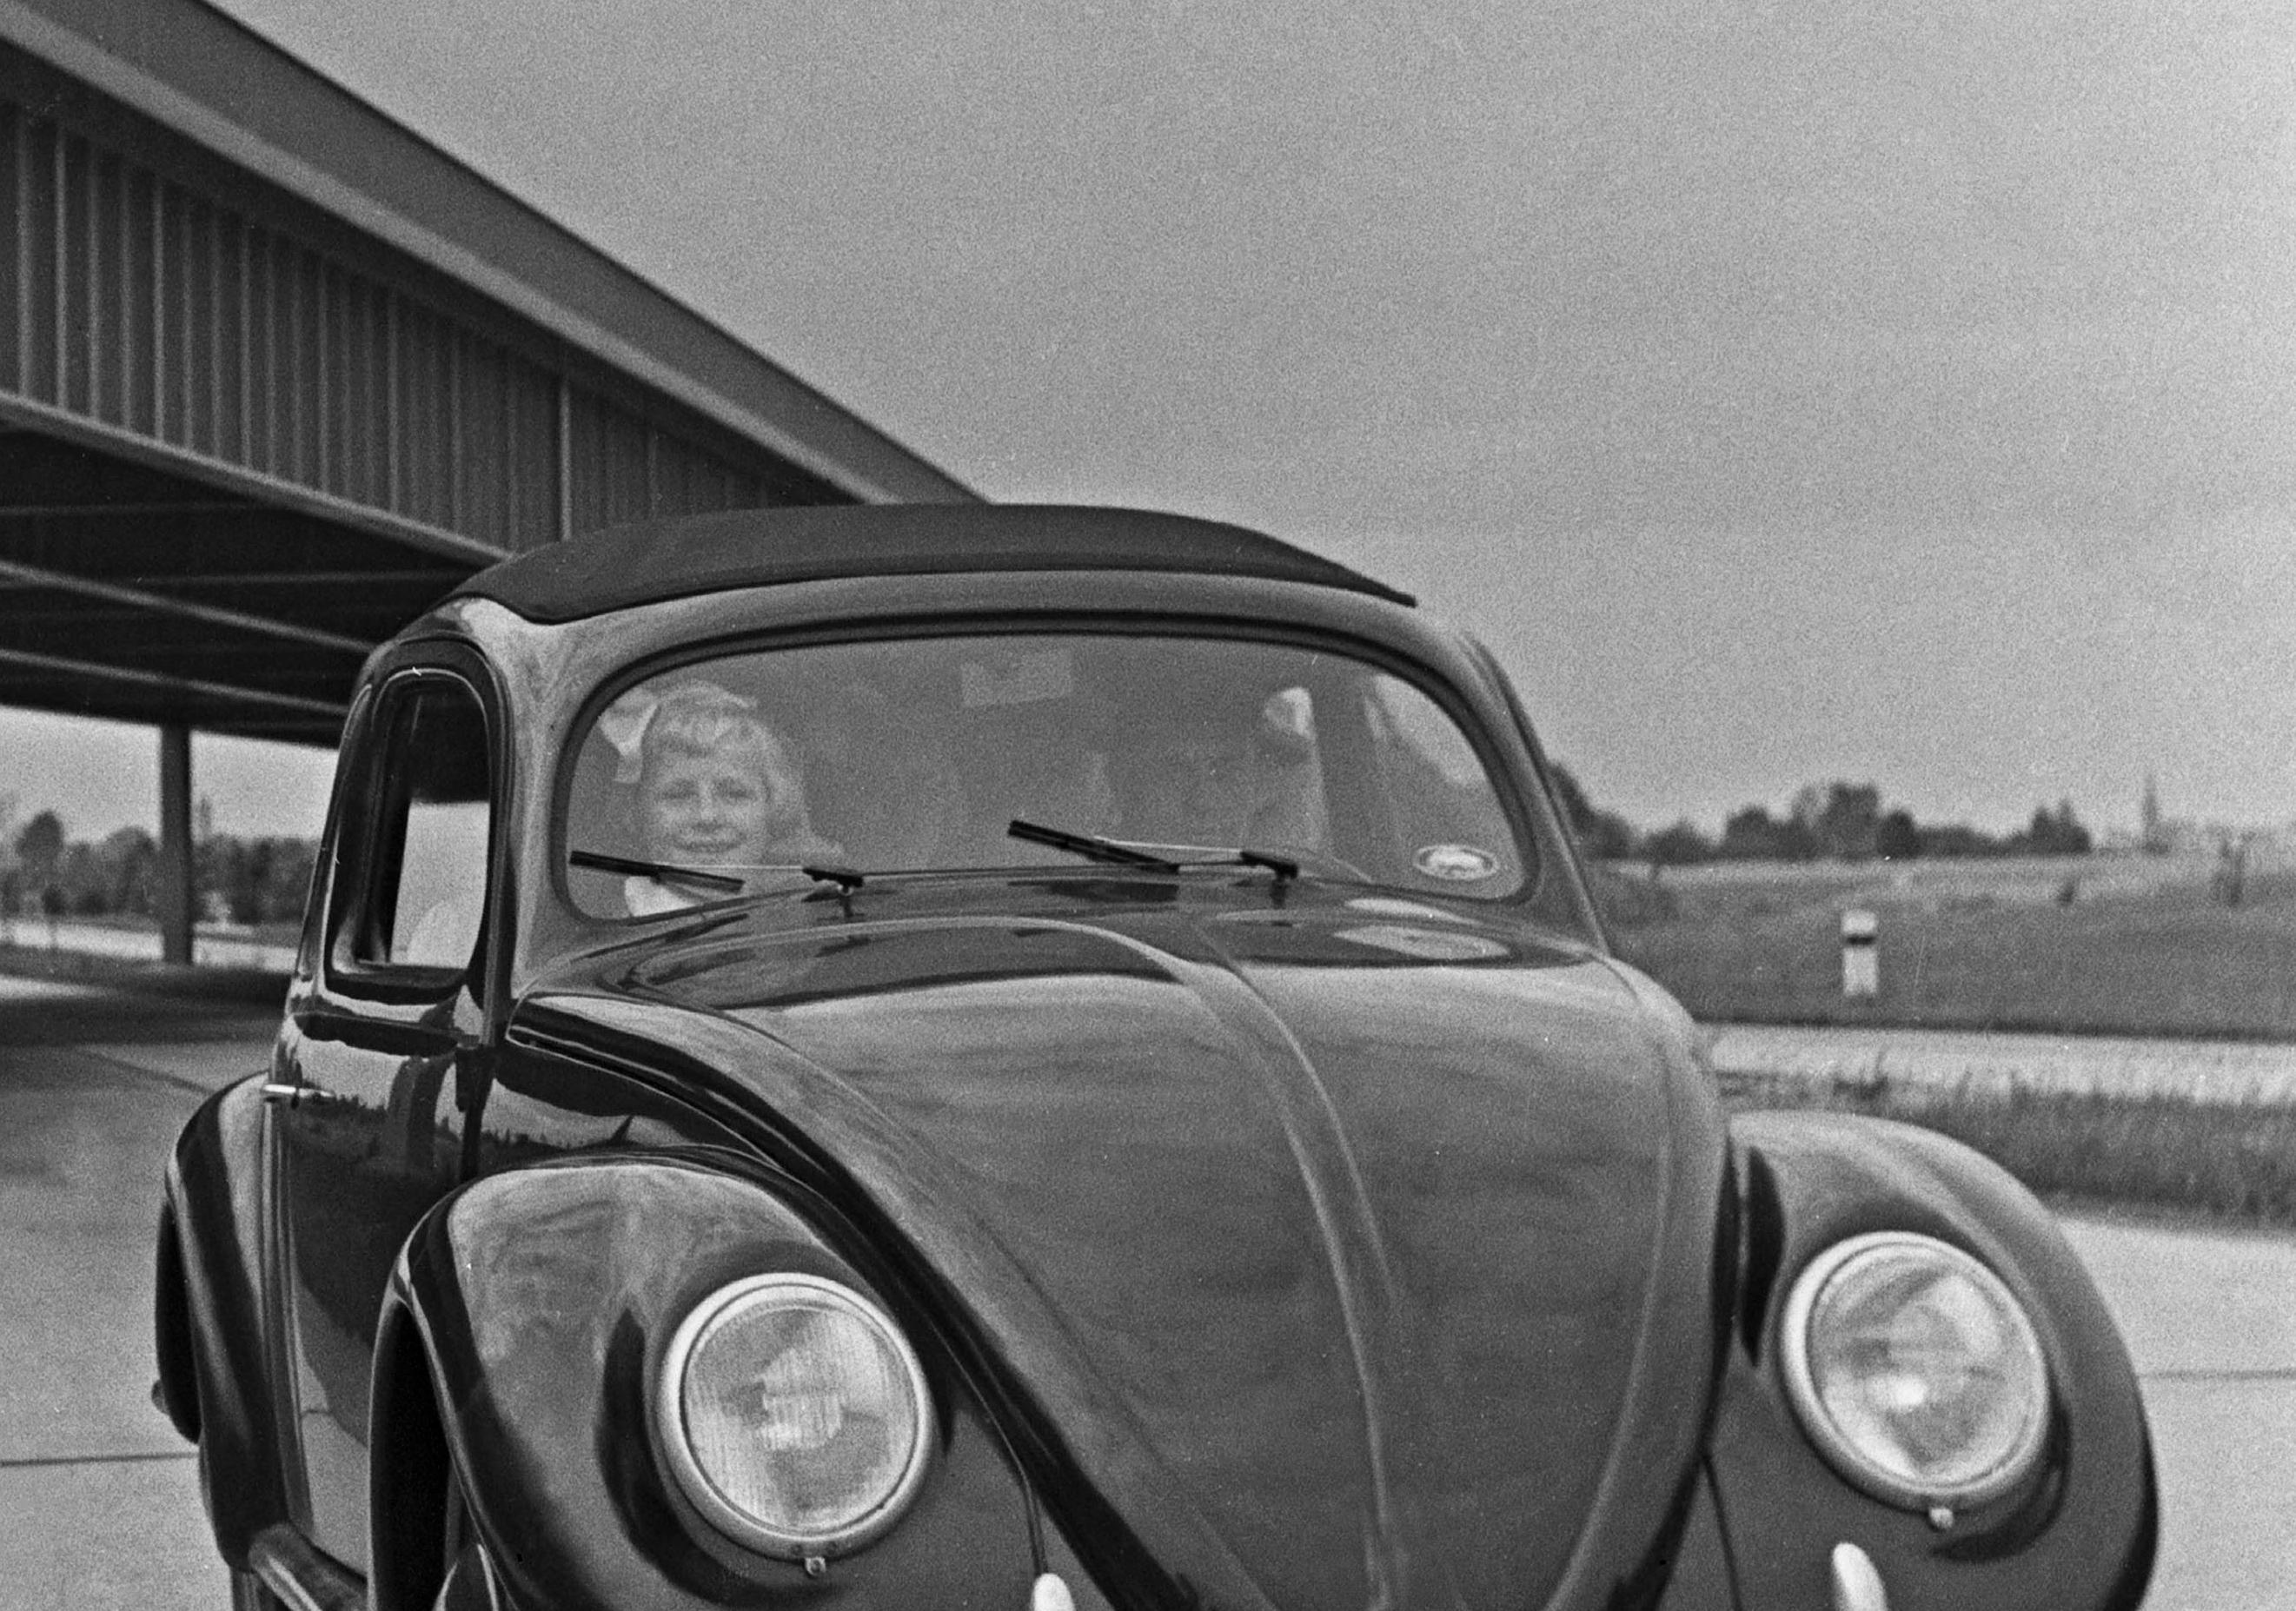 Volkswagen beetle on highway, Germany 1937 Printed Later  - Photograph by Karl Heinrich Lämmel